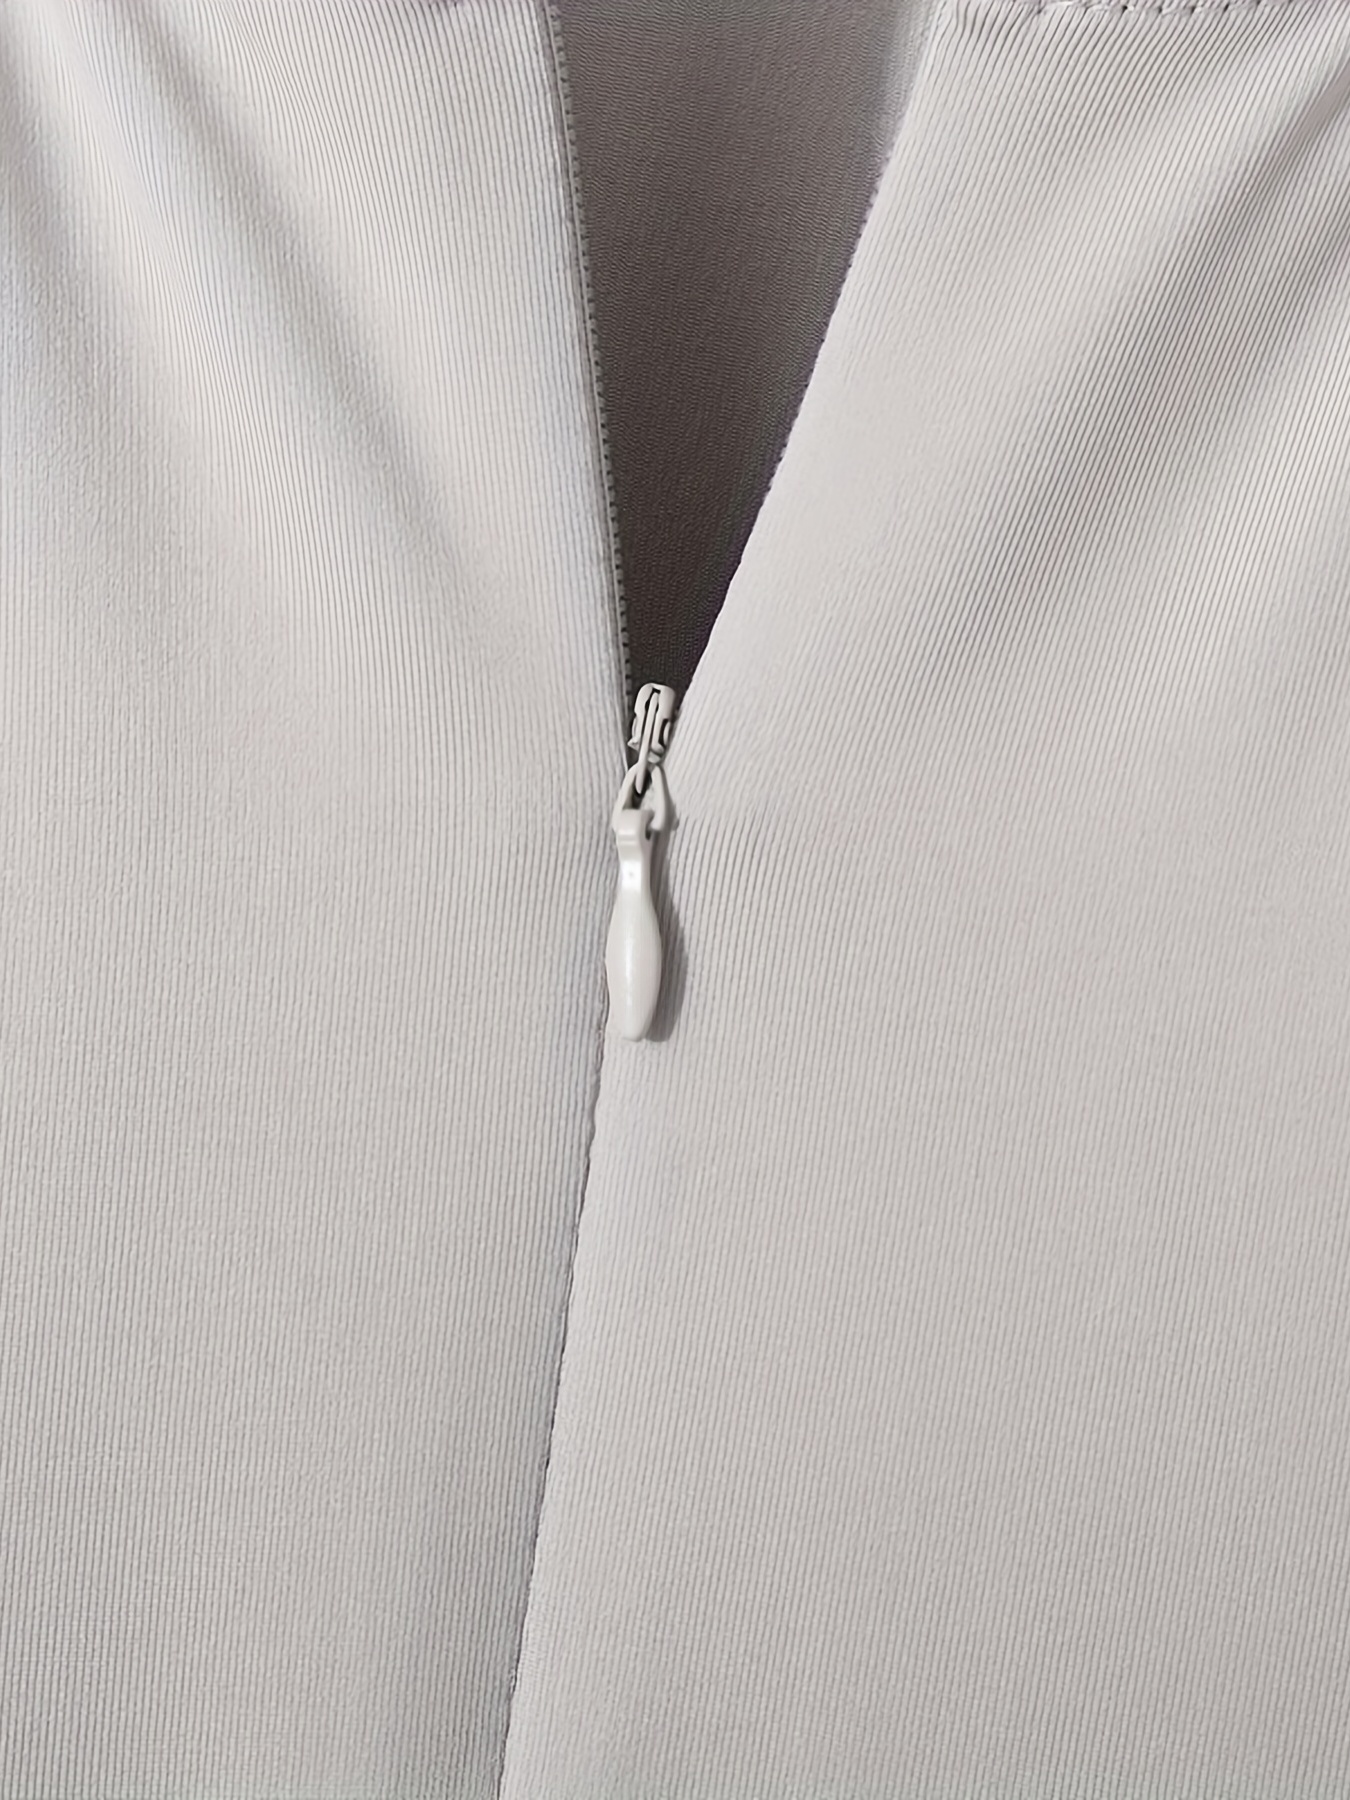 inhzoy Men's Short Sleeve Undershirt One Piece Leotard Top Press Button  Crotch Shirt Bodysuit Slim Fit Romper White XL